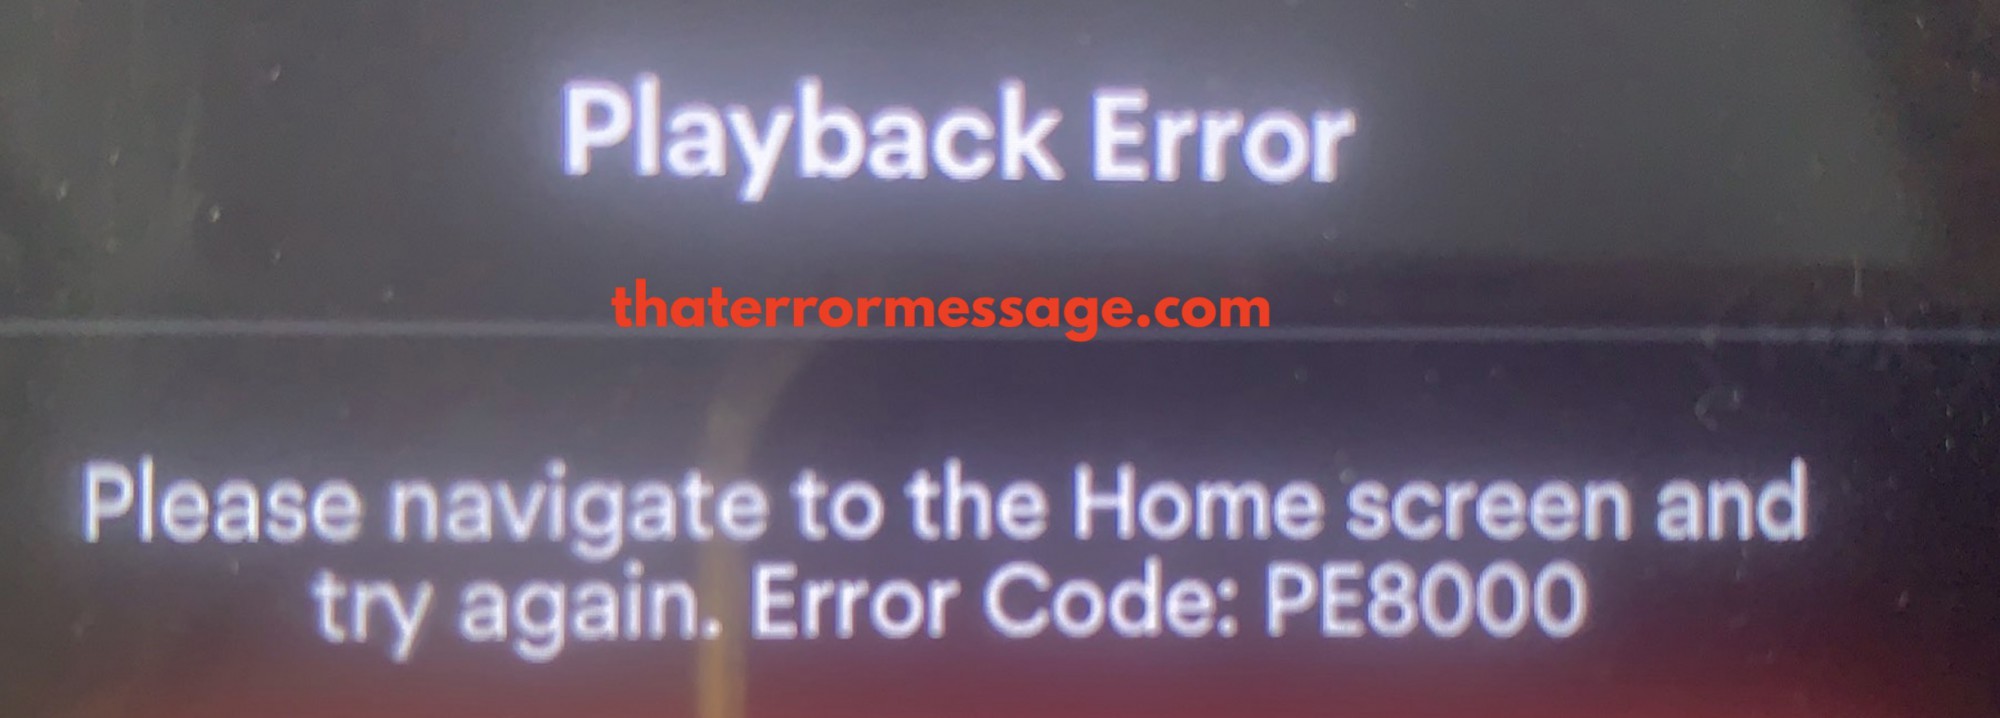 Error Code Pe8000 Playback Error Foxtel